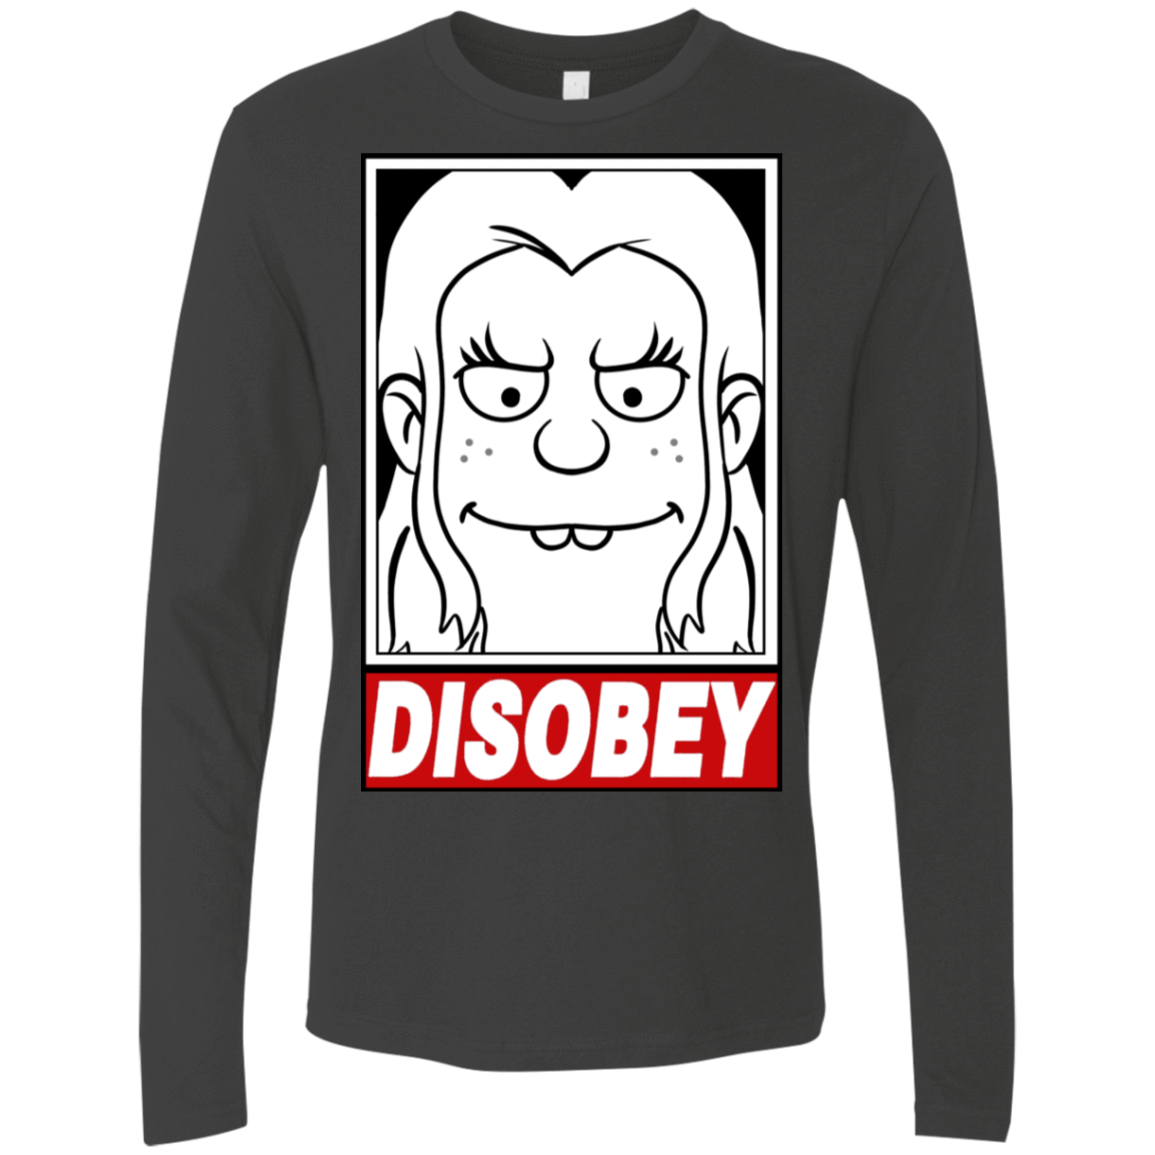 T-Shirts Heavy Metal / S Disobey Men's Premium Long Sleeve